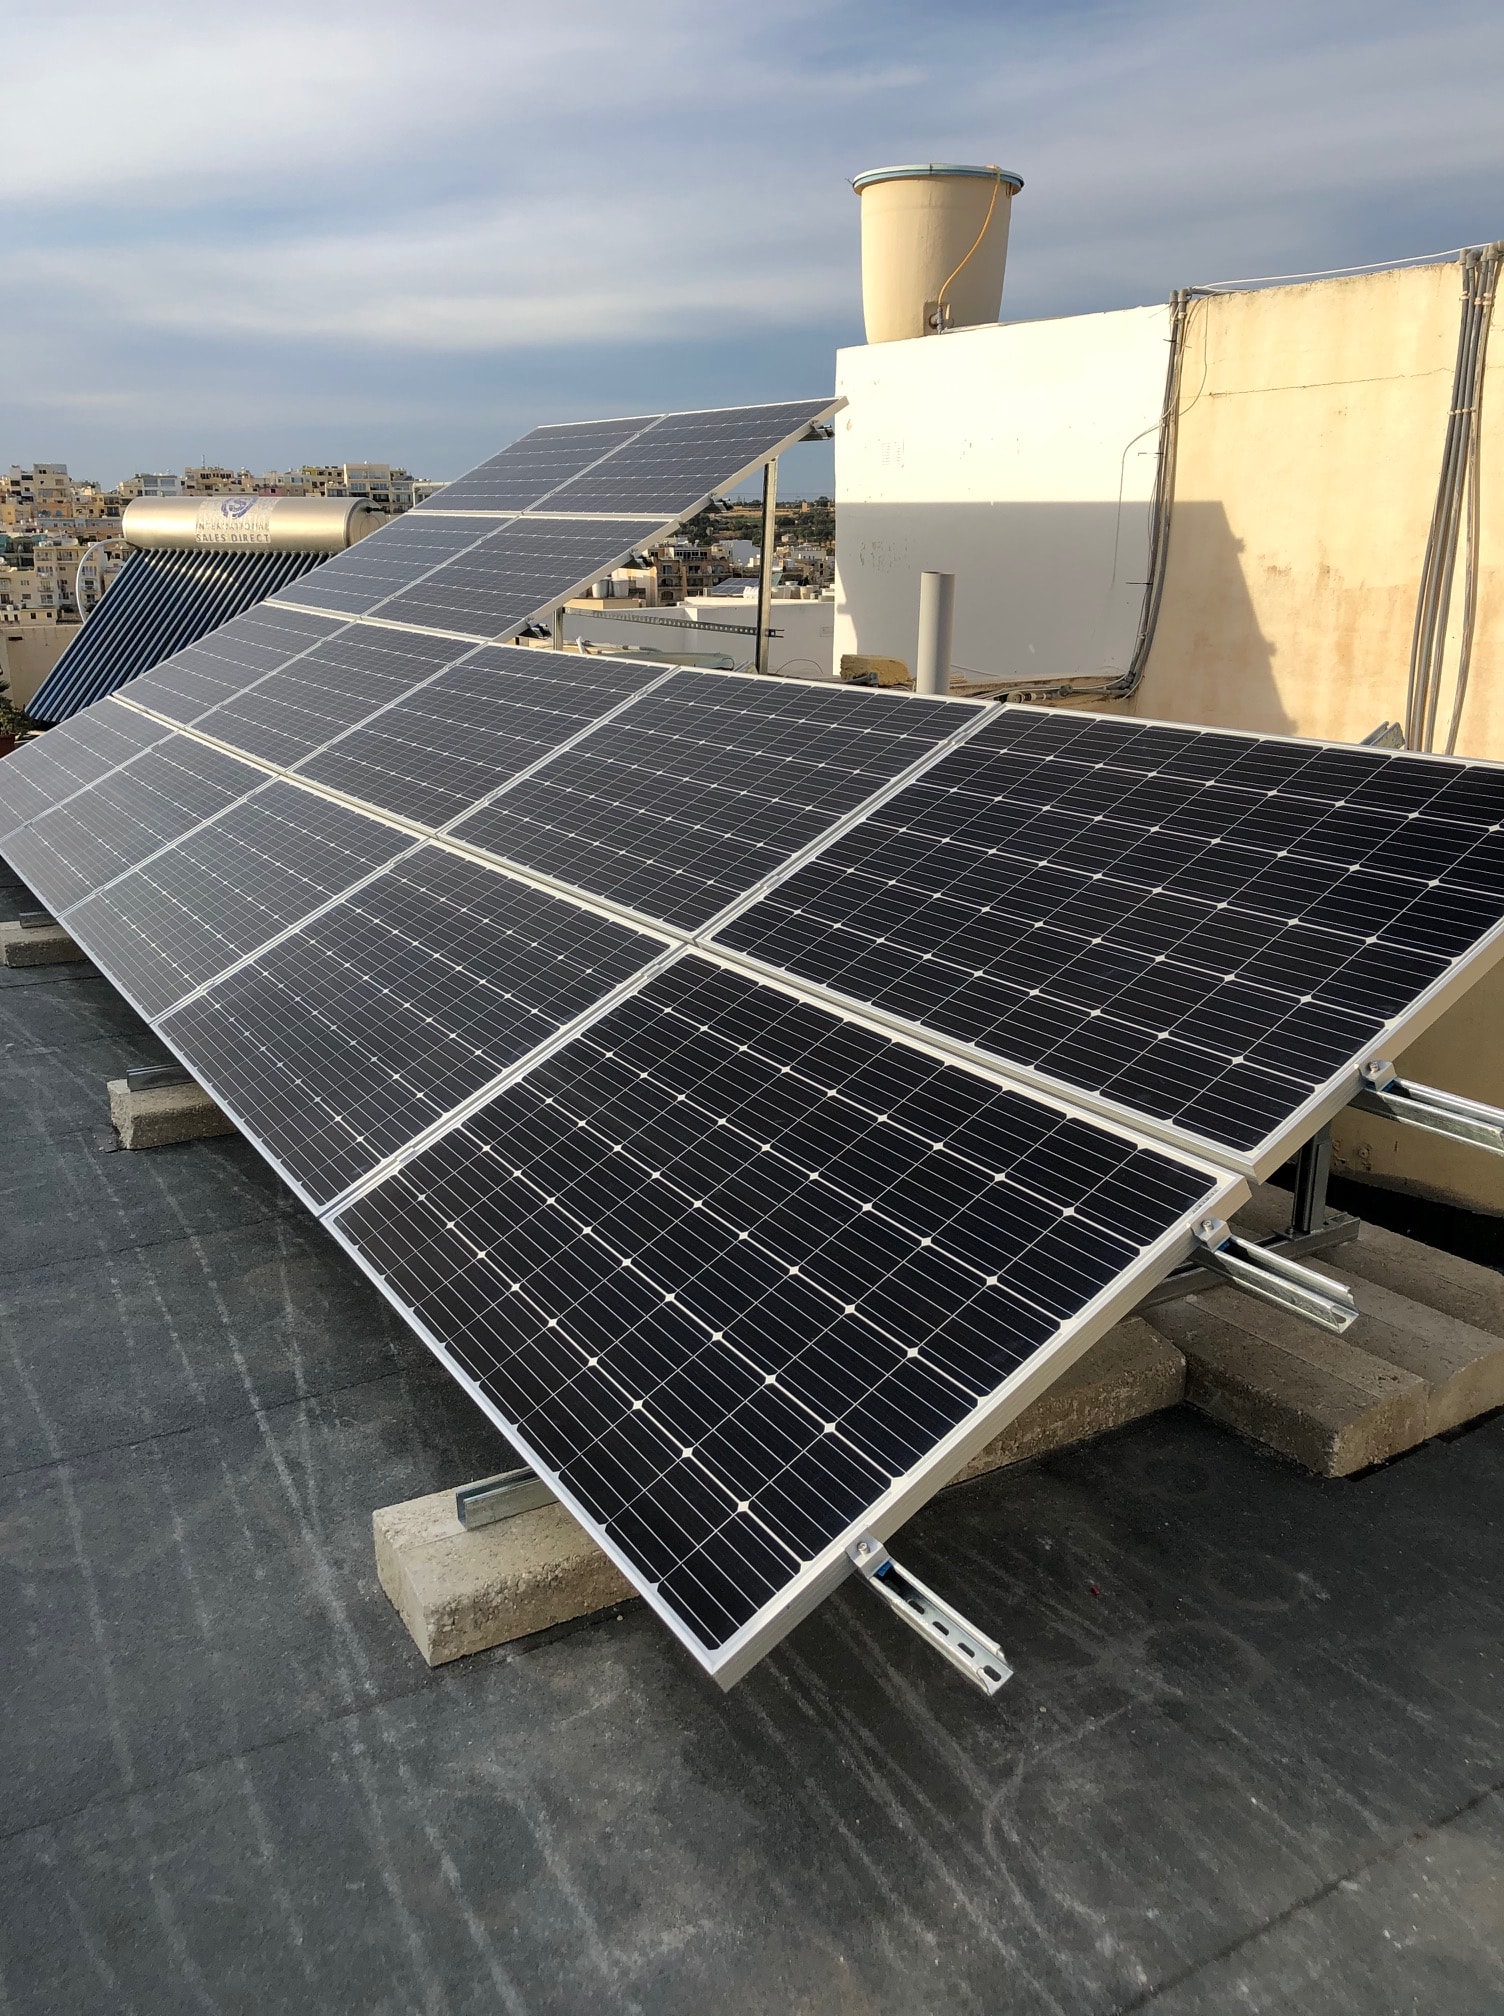 solar-panels-malta-best-value-pv-offers-virtuesolaris